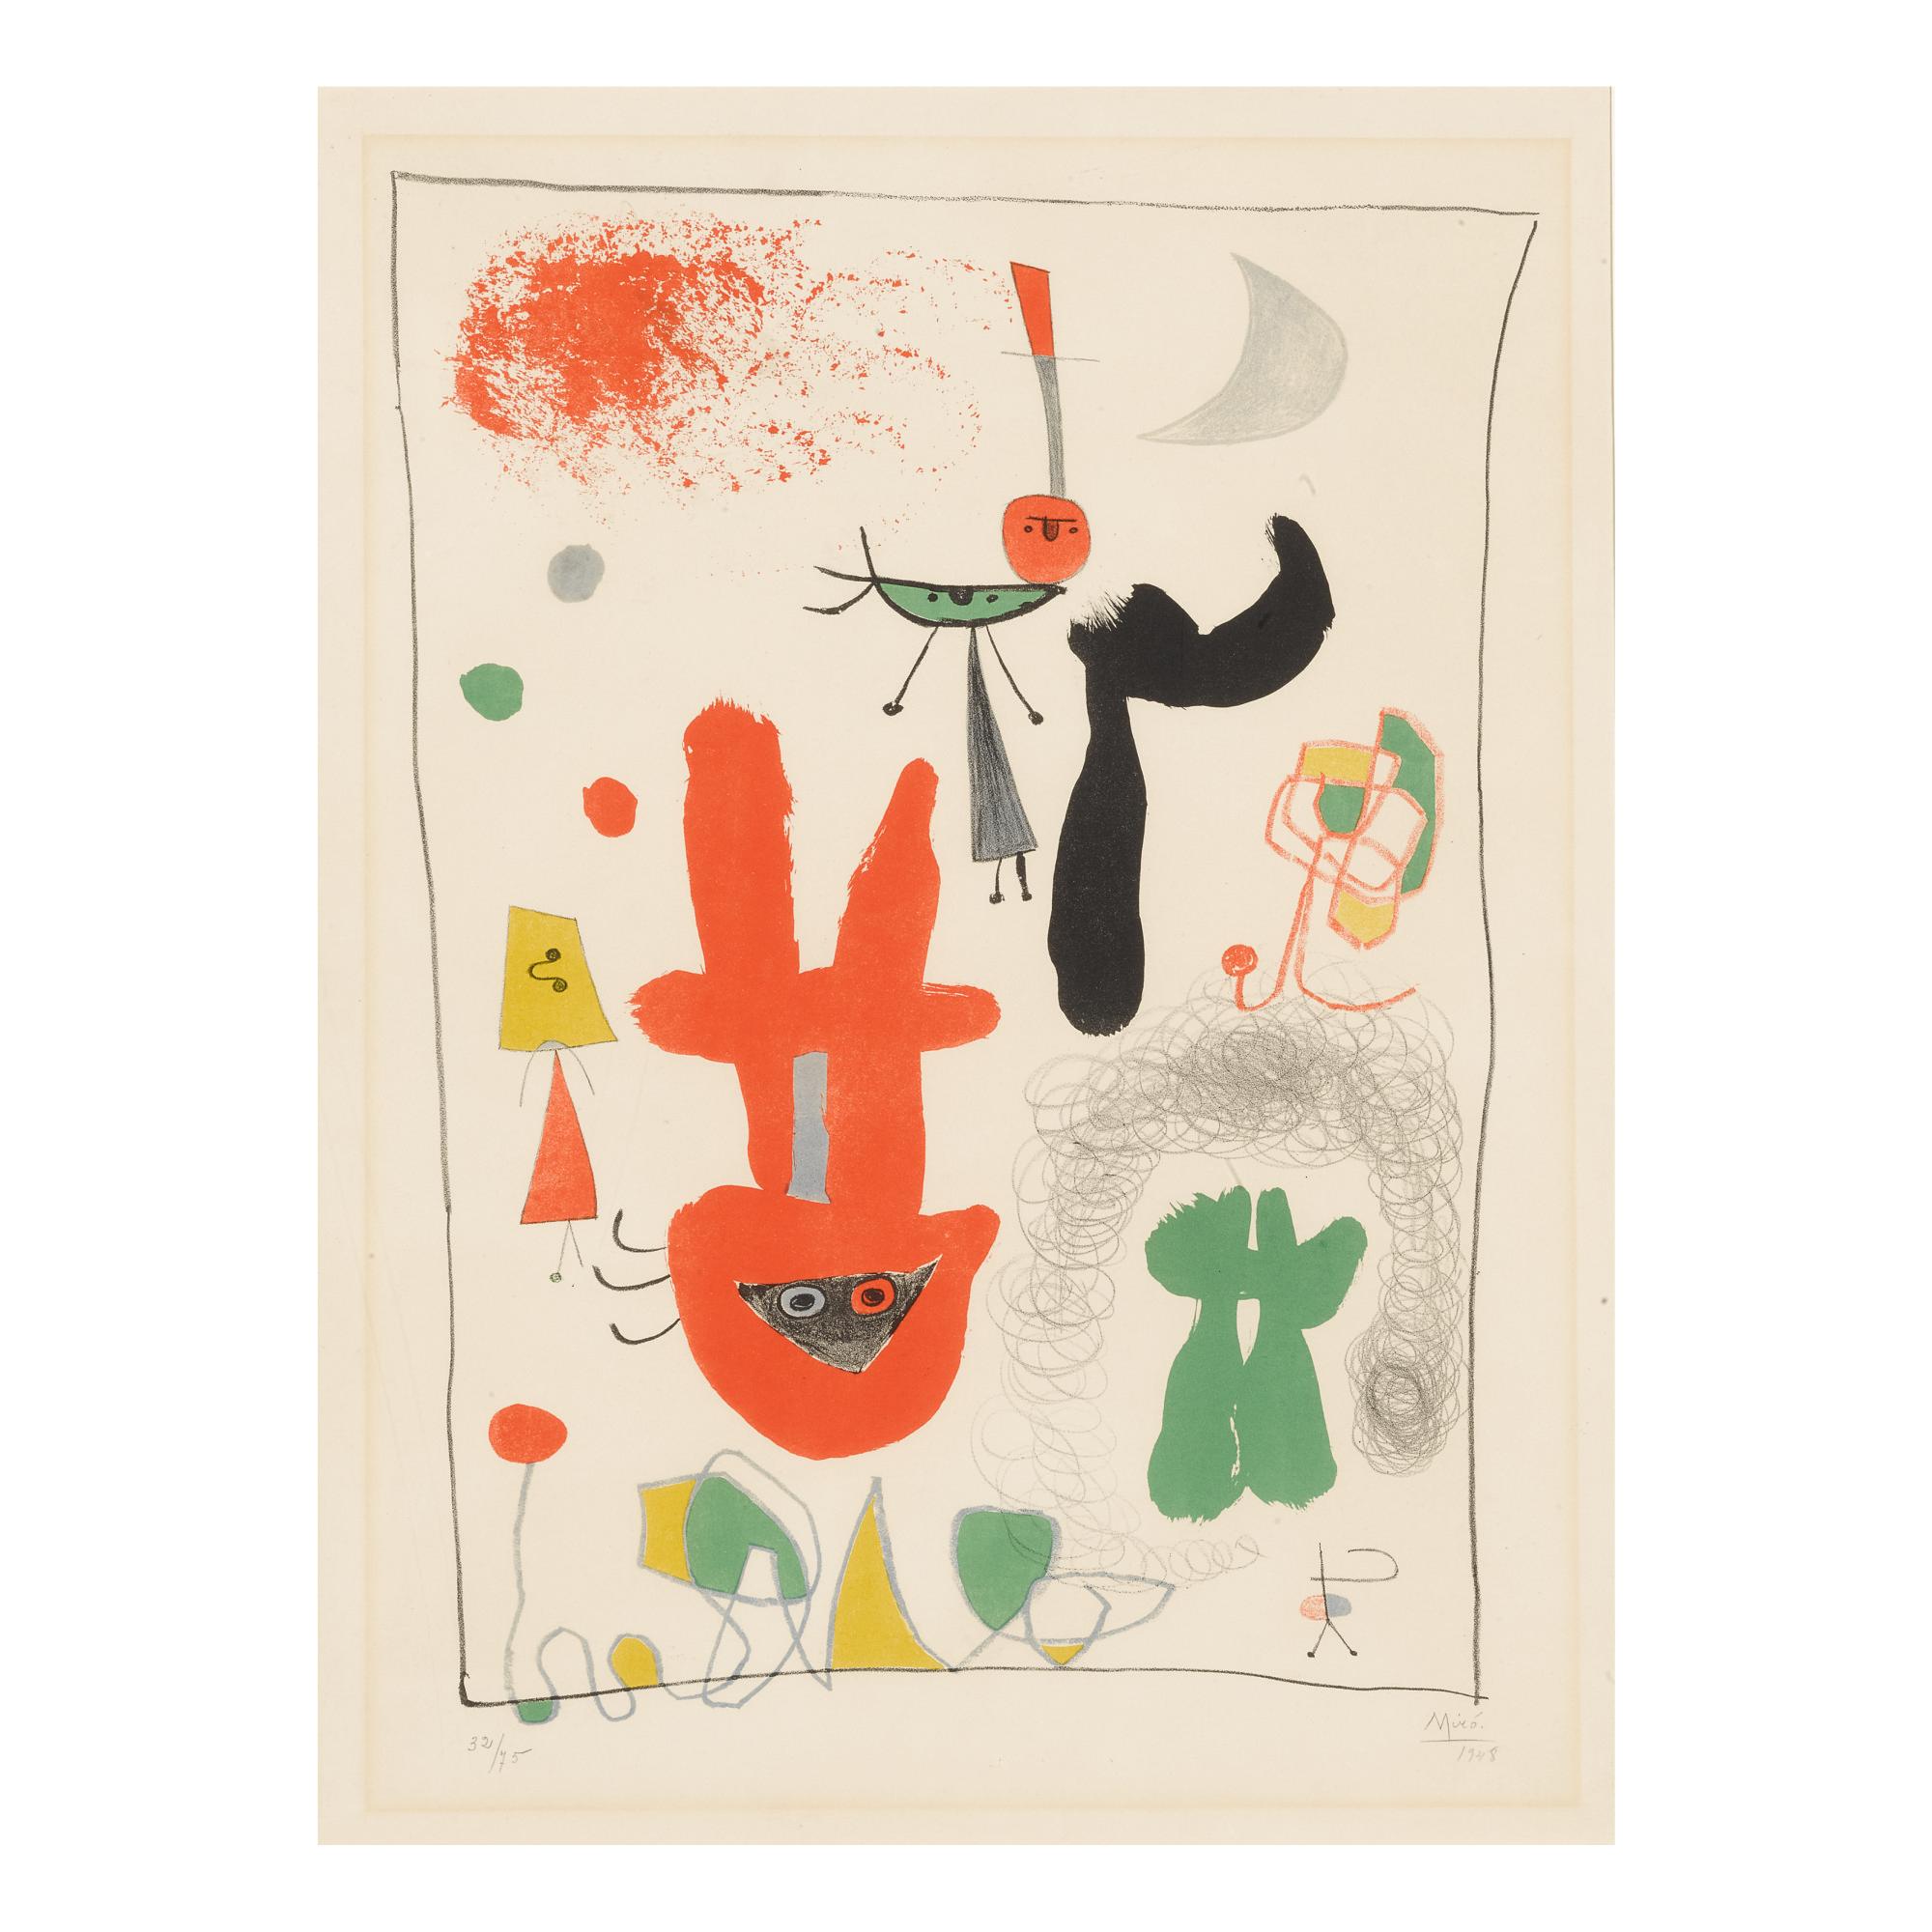 Acrobats in the garden - Print by Joan Miró